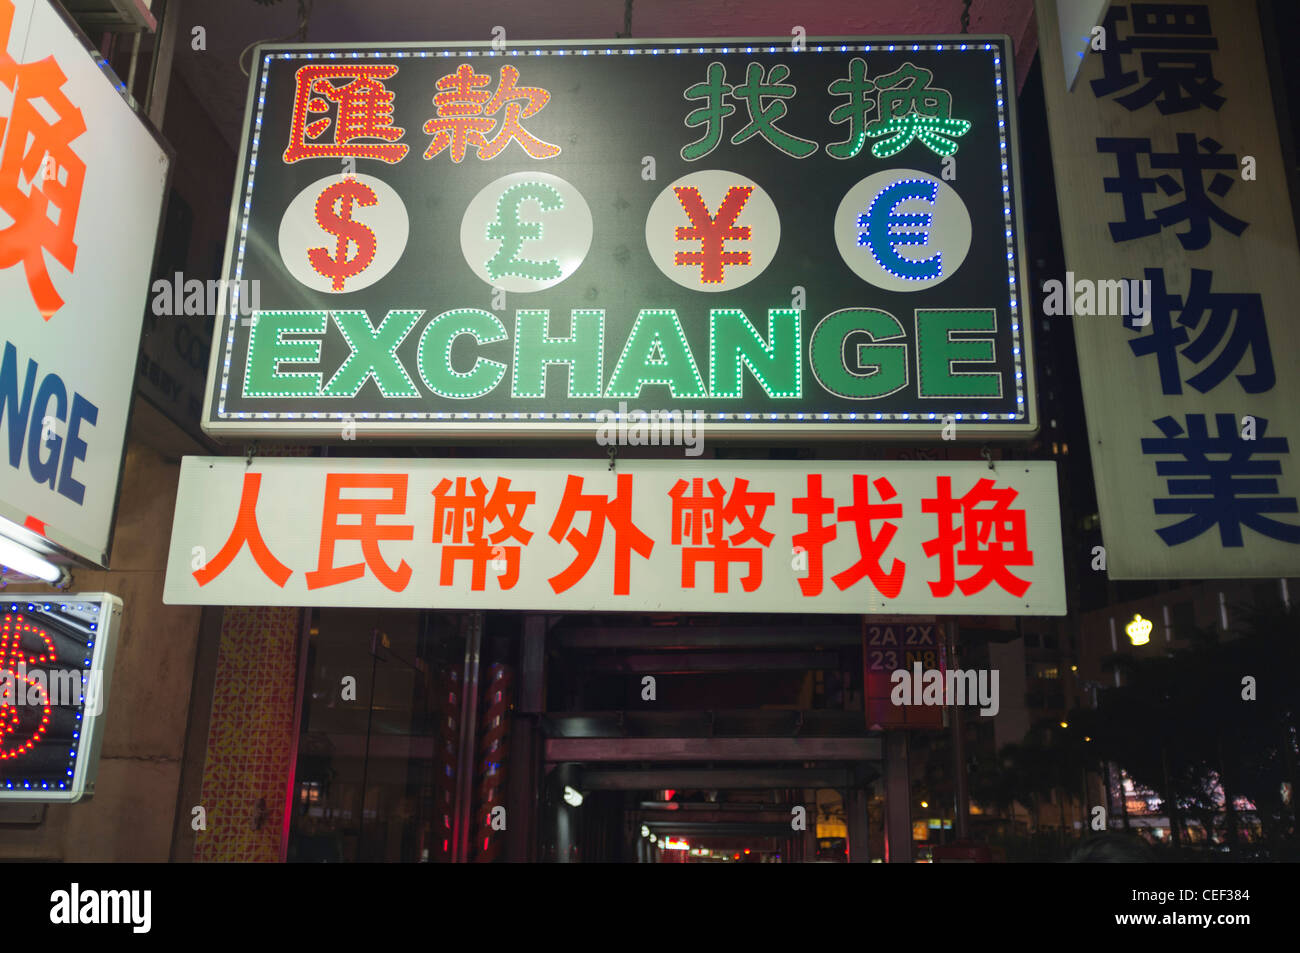 dh MONEDA EXTRANJERA HONG KONG Cambio de moneda extranjera signo Caligrafía China y asia inglesa Foto de stock